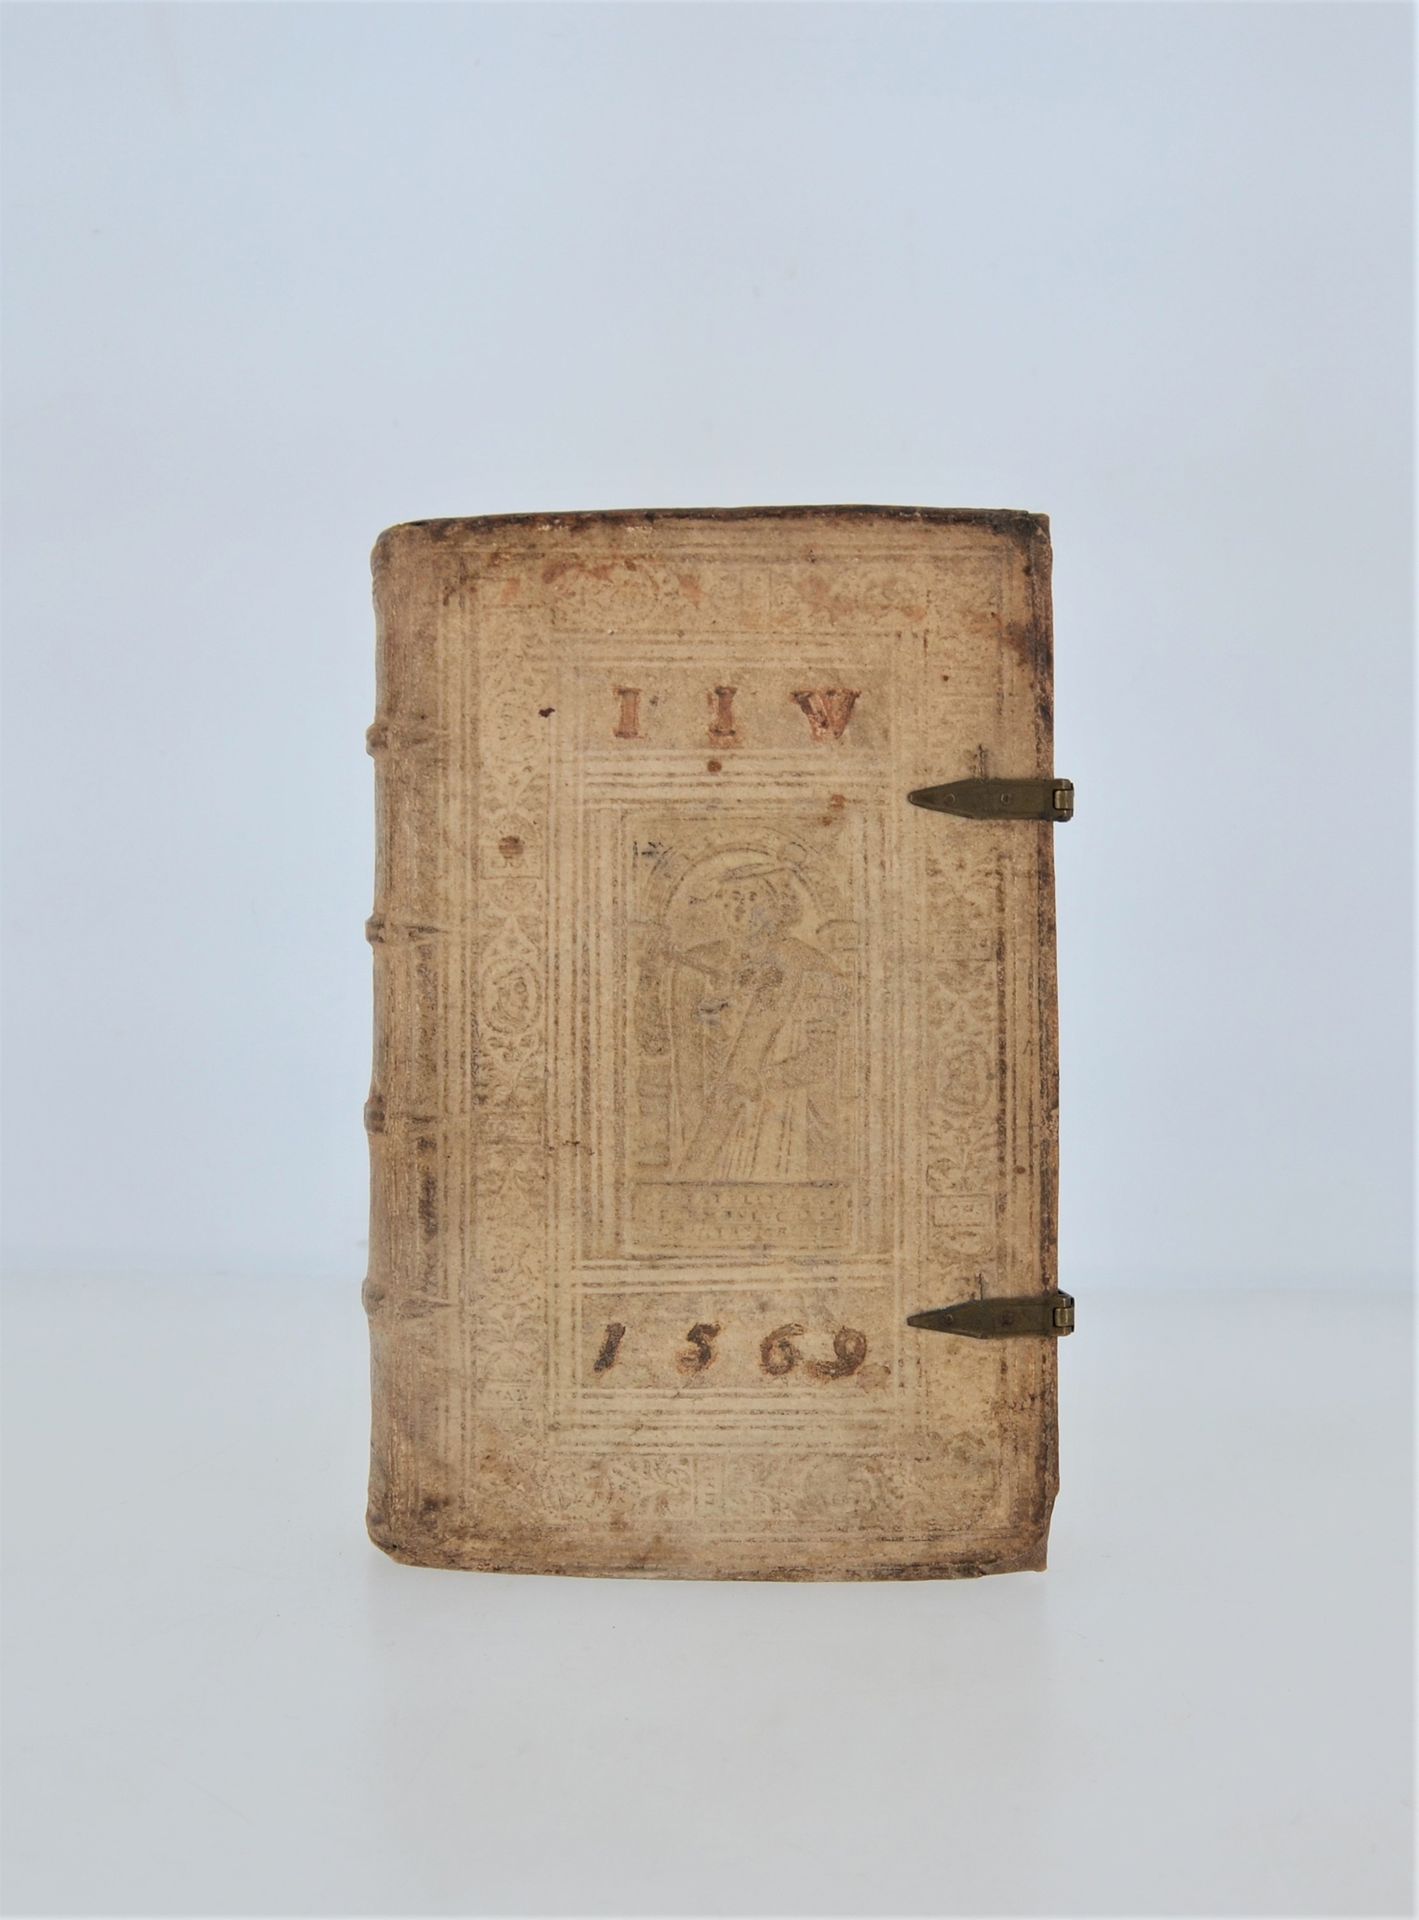 JUSTINIEN Ier. Institutionum libri IIII.里昂，安托万-文森特，1568年。8开本，冷印母猪皮，花纹和卷轴，寓言式的画像绘&hellip;